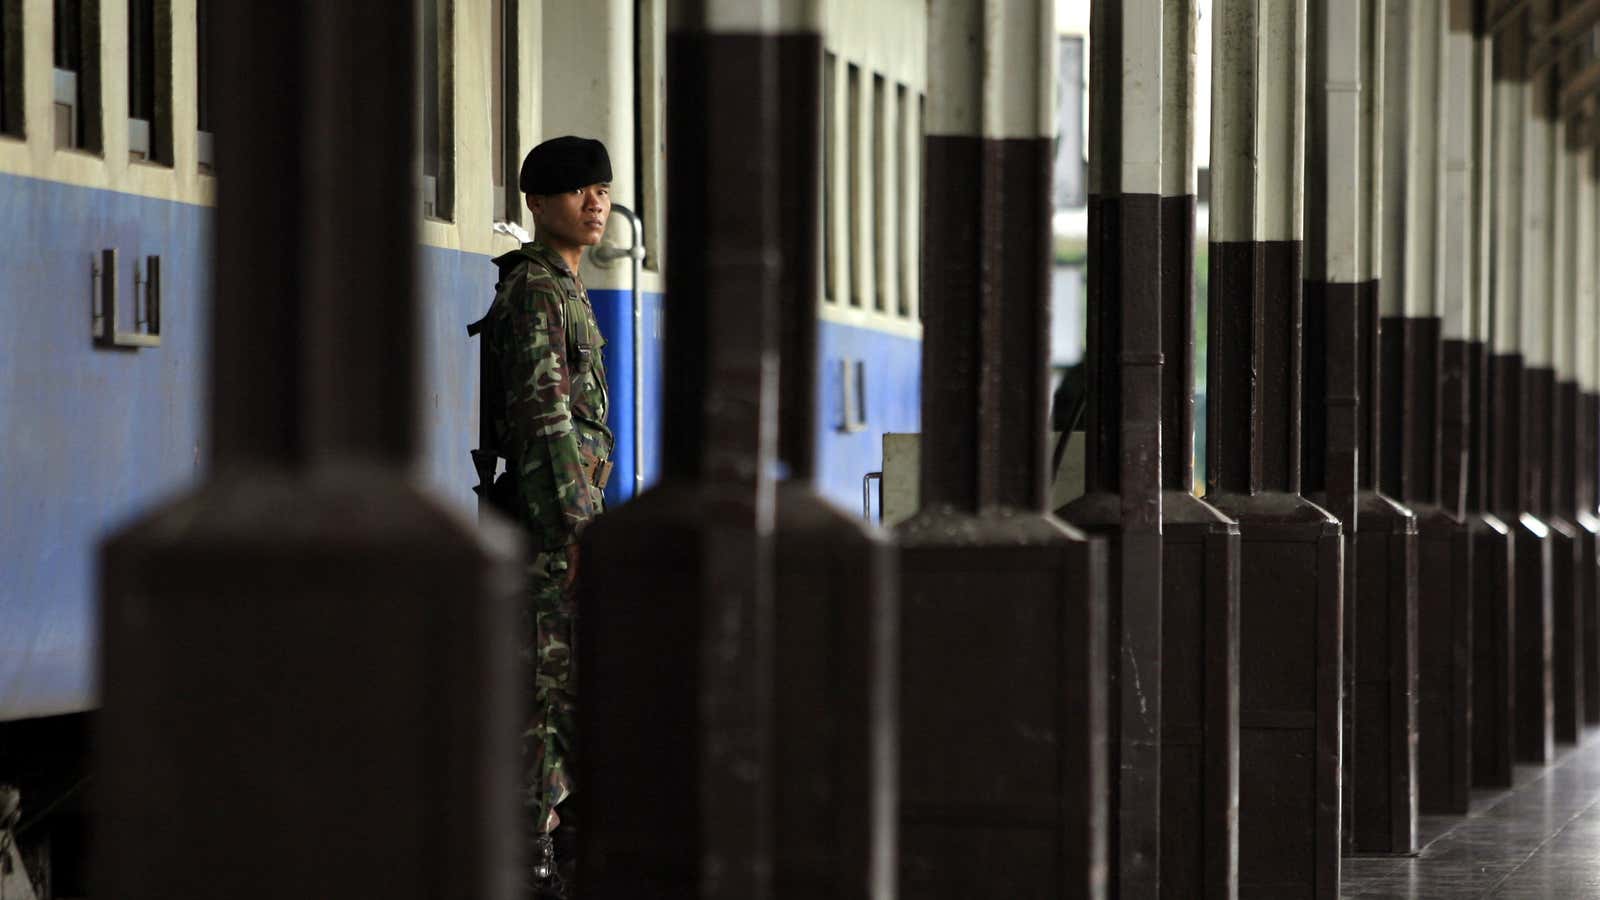 A Thai military guard keeps watch at a train station.